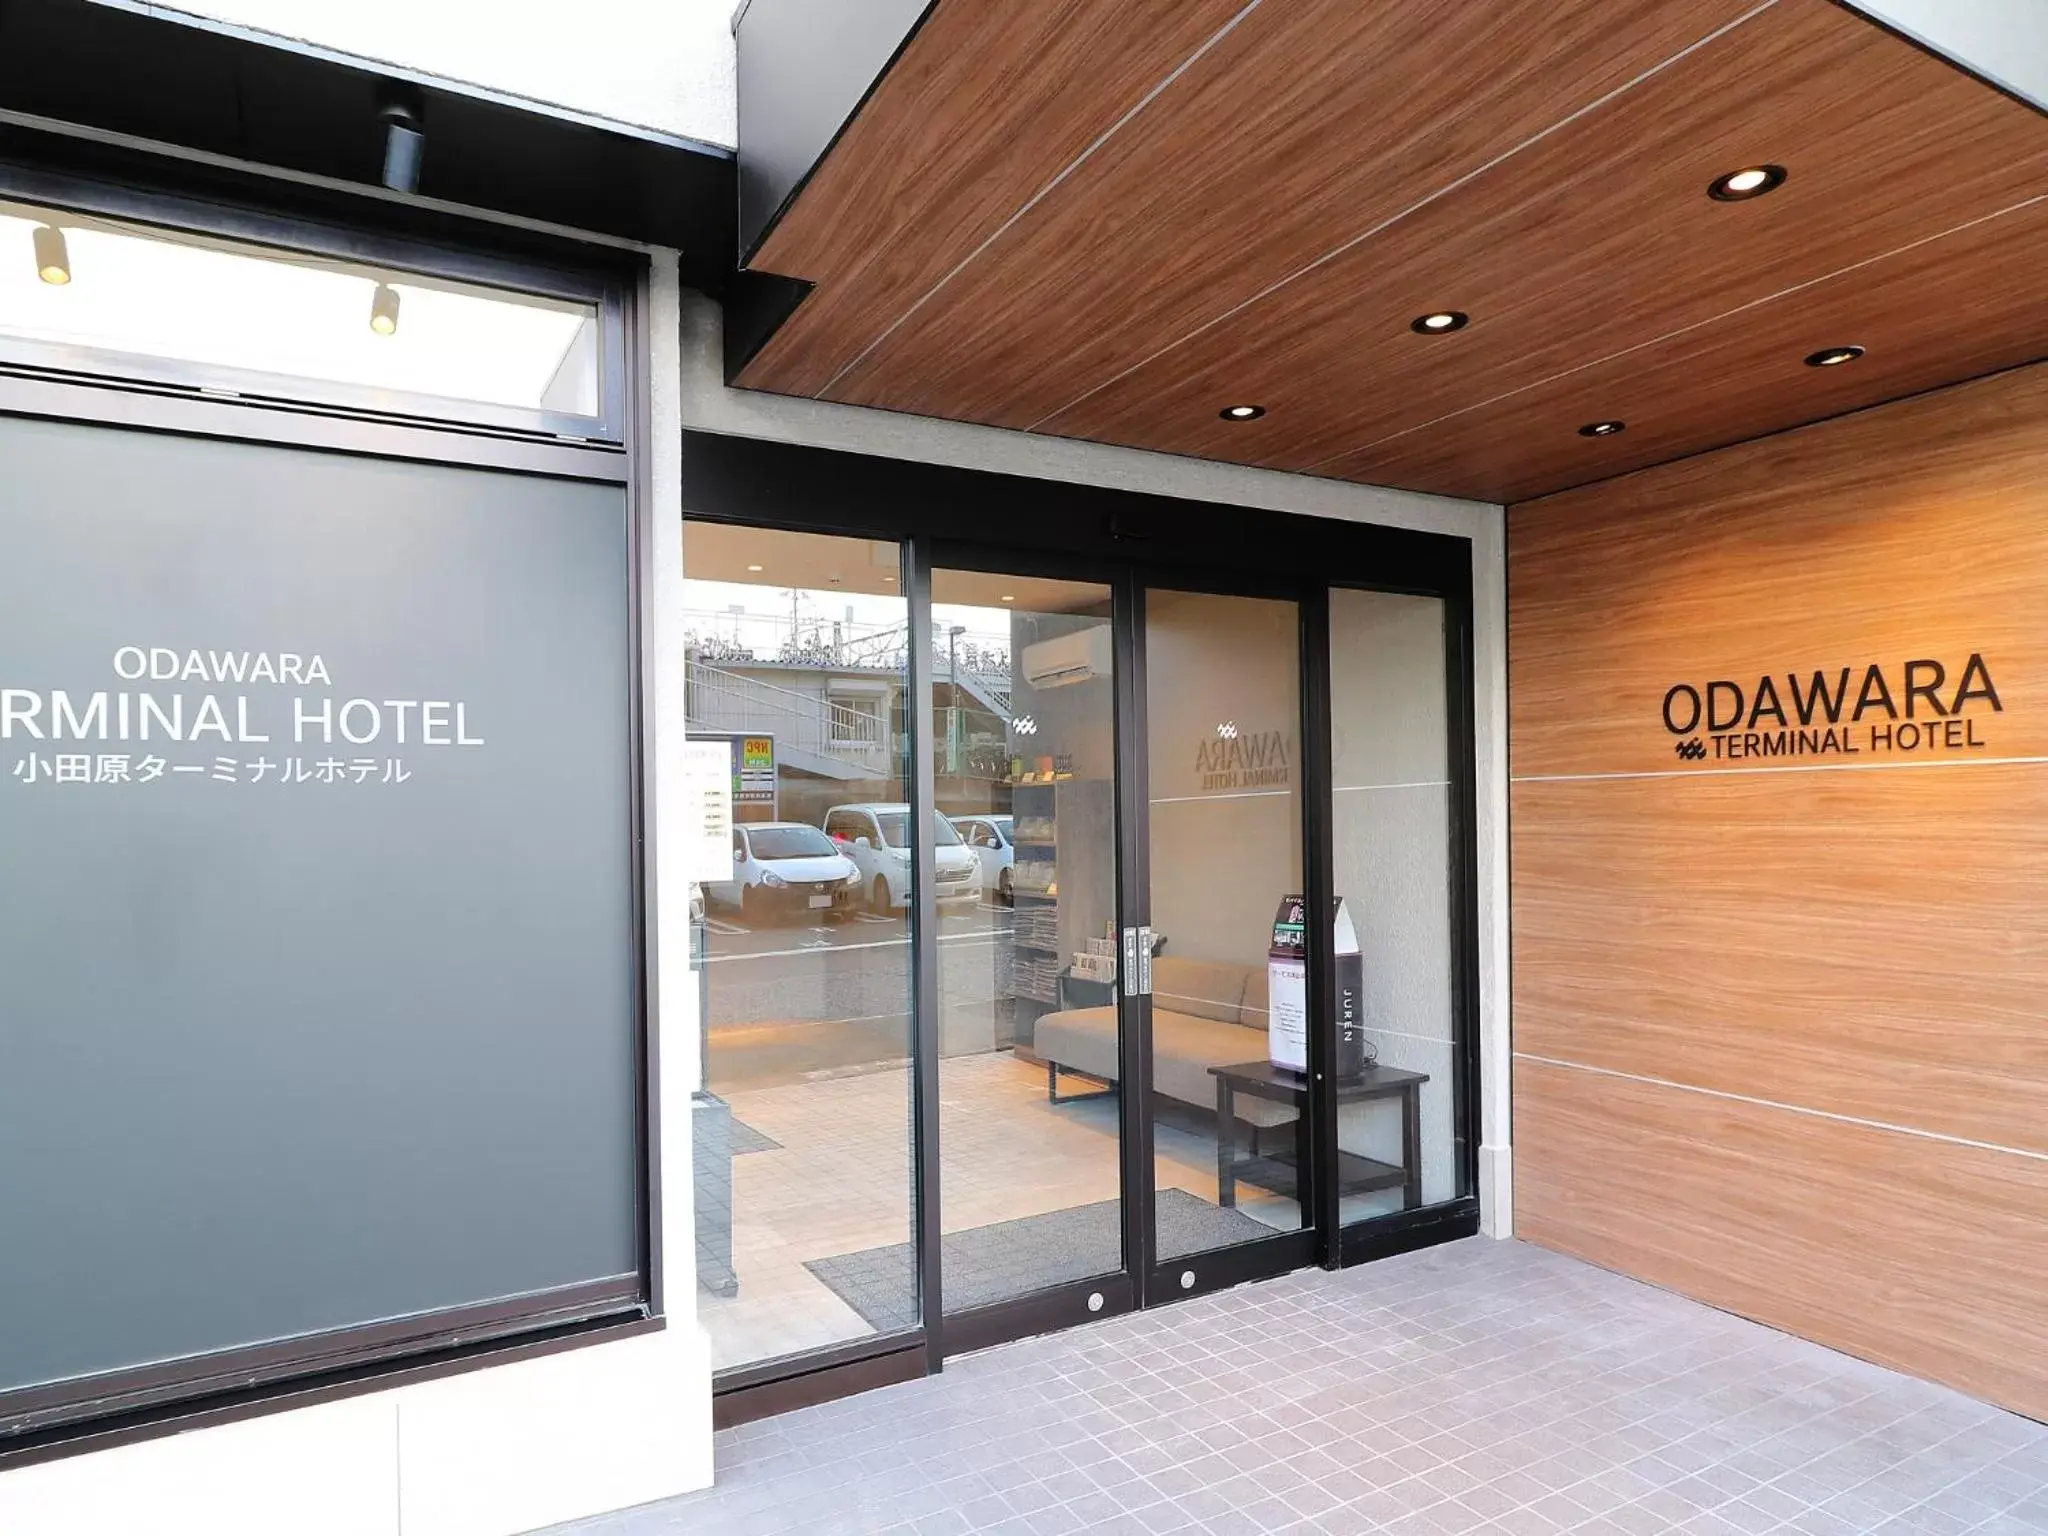 Property building in Odawara Terminal Hotel